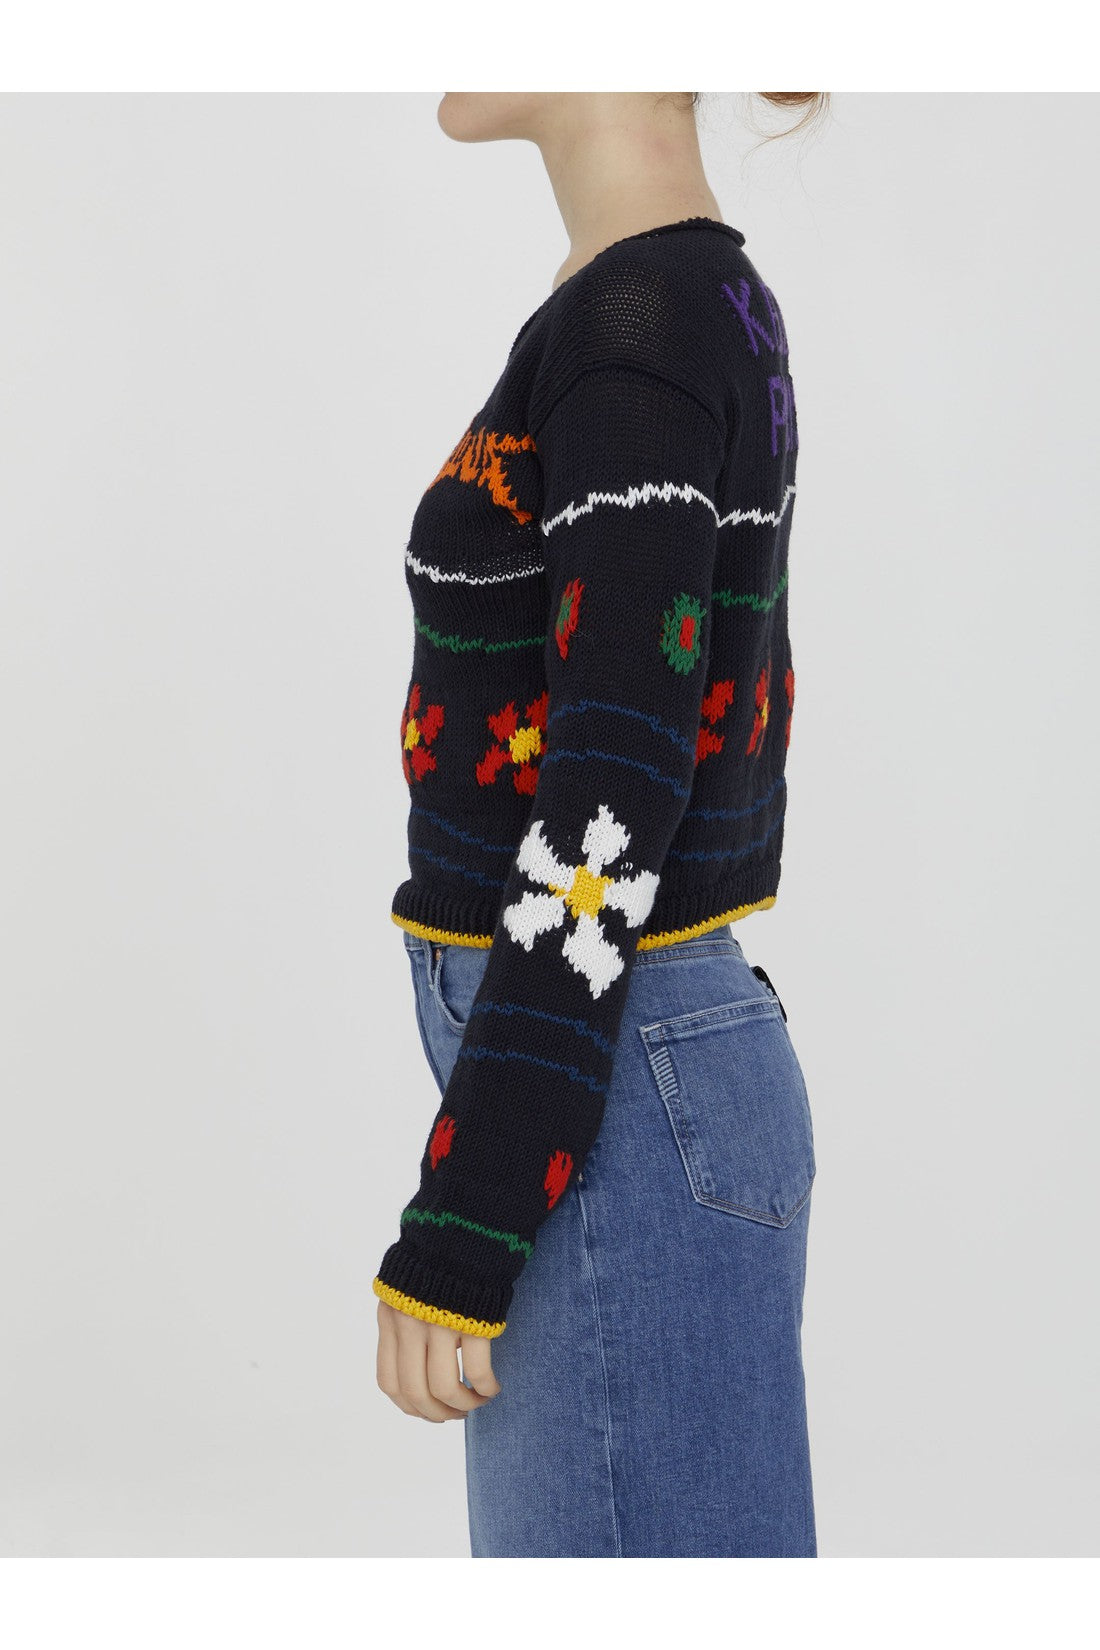 Multicolor embroidered jumper